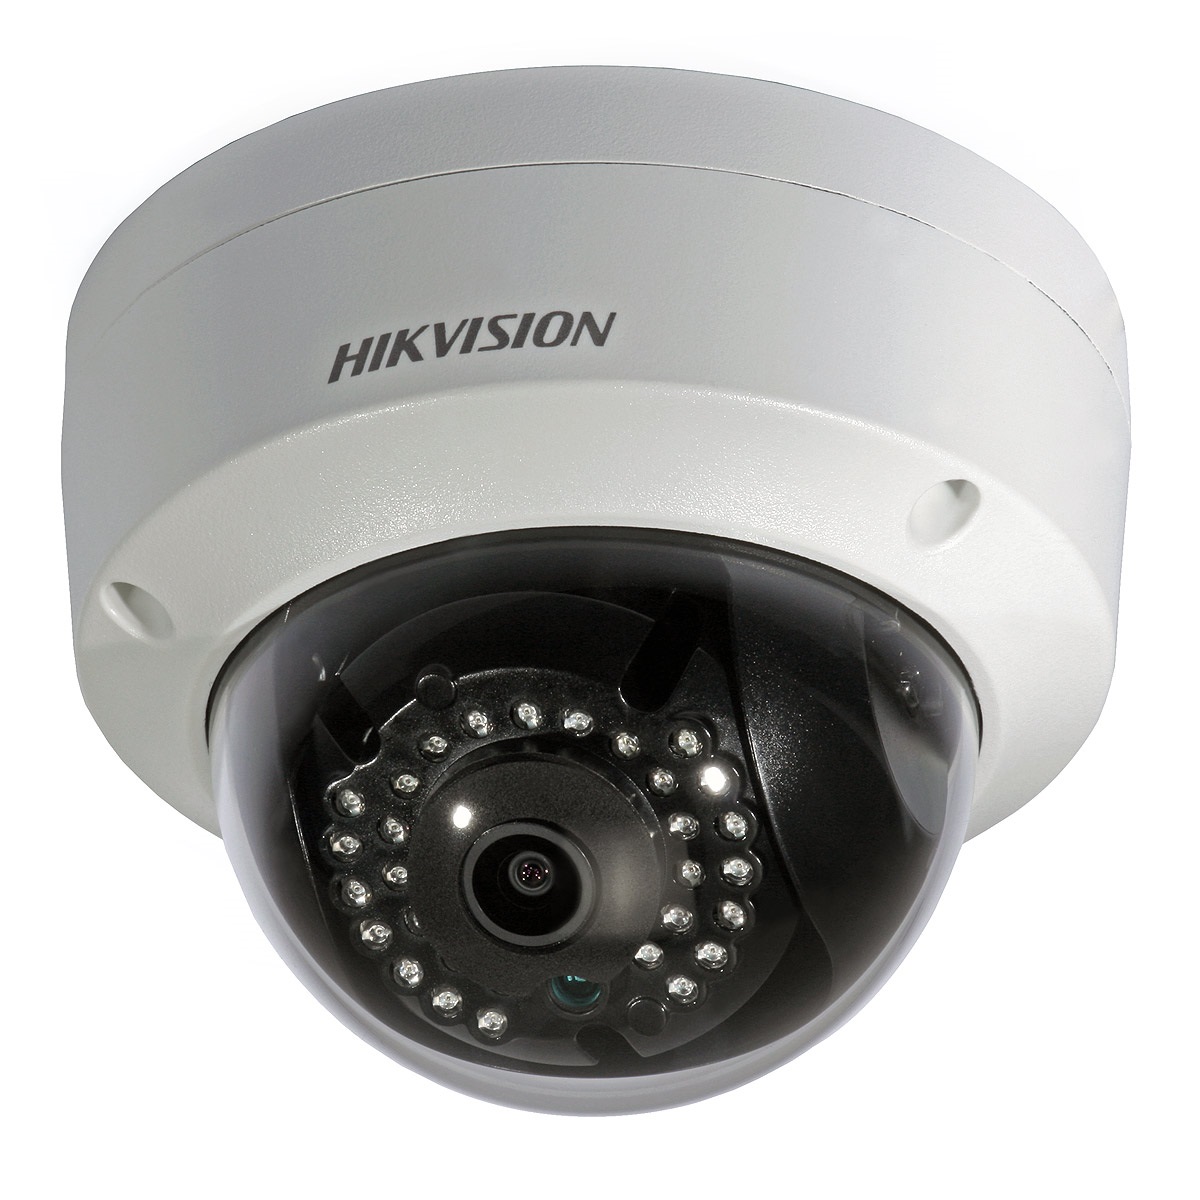 Hikvision Hikvision DS-2CD2142FWD-IWS WIFI 4MP POE IR Bewegungserkennung Audio Alarm Kamer 